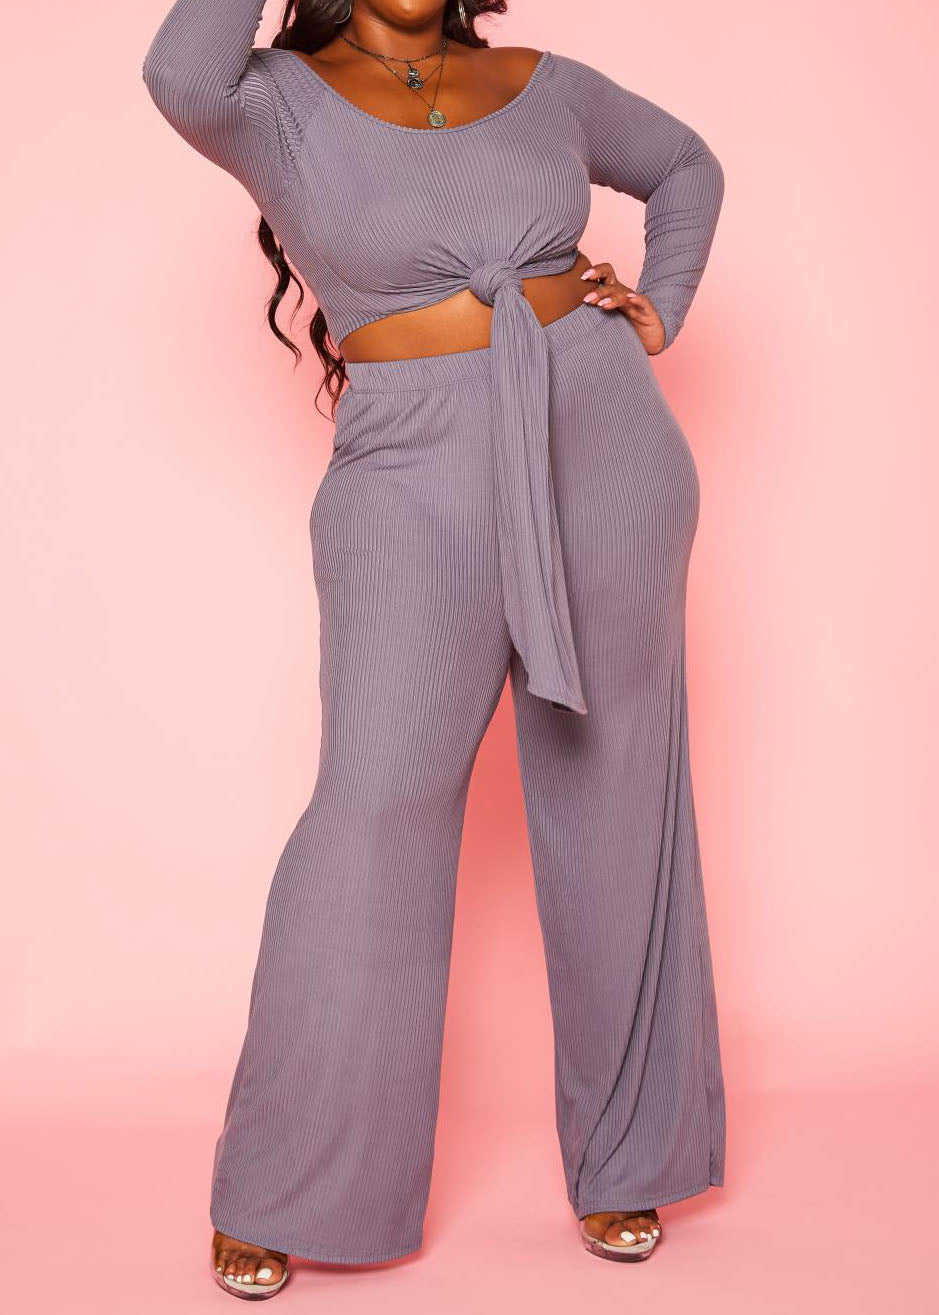 Hi Curvy Plus Size Women Ribbed Knit Long Sleeve Top & Pants Set